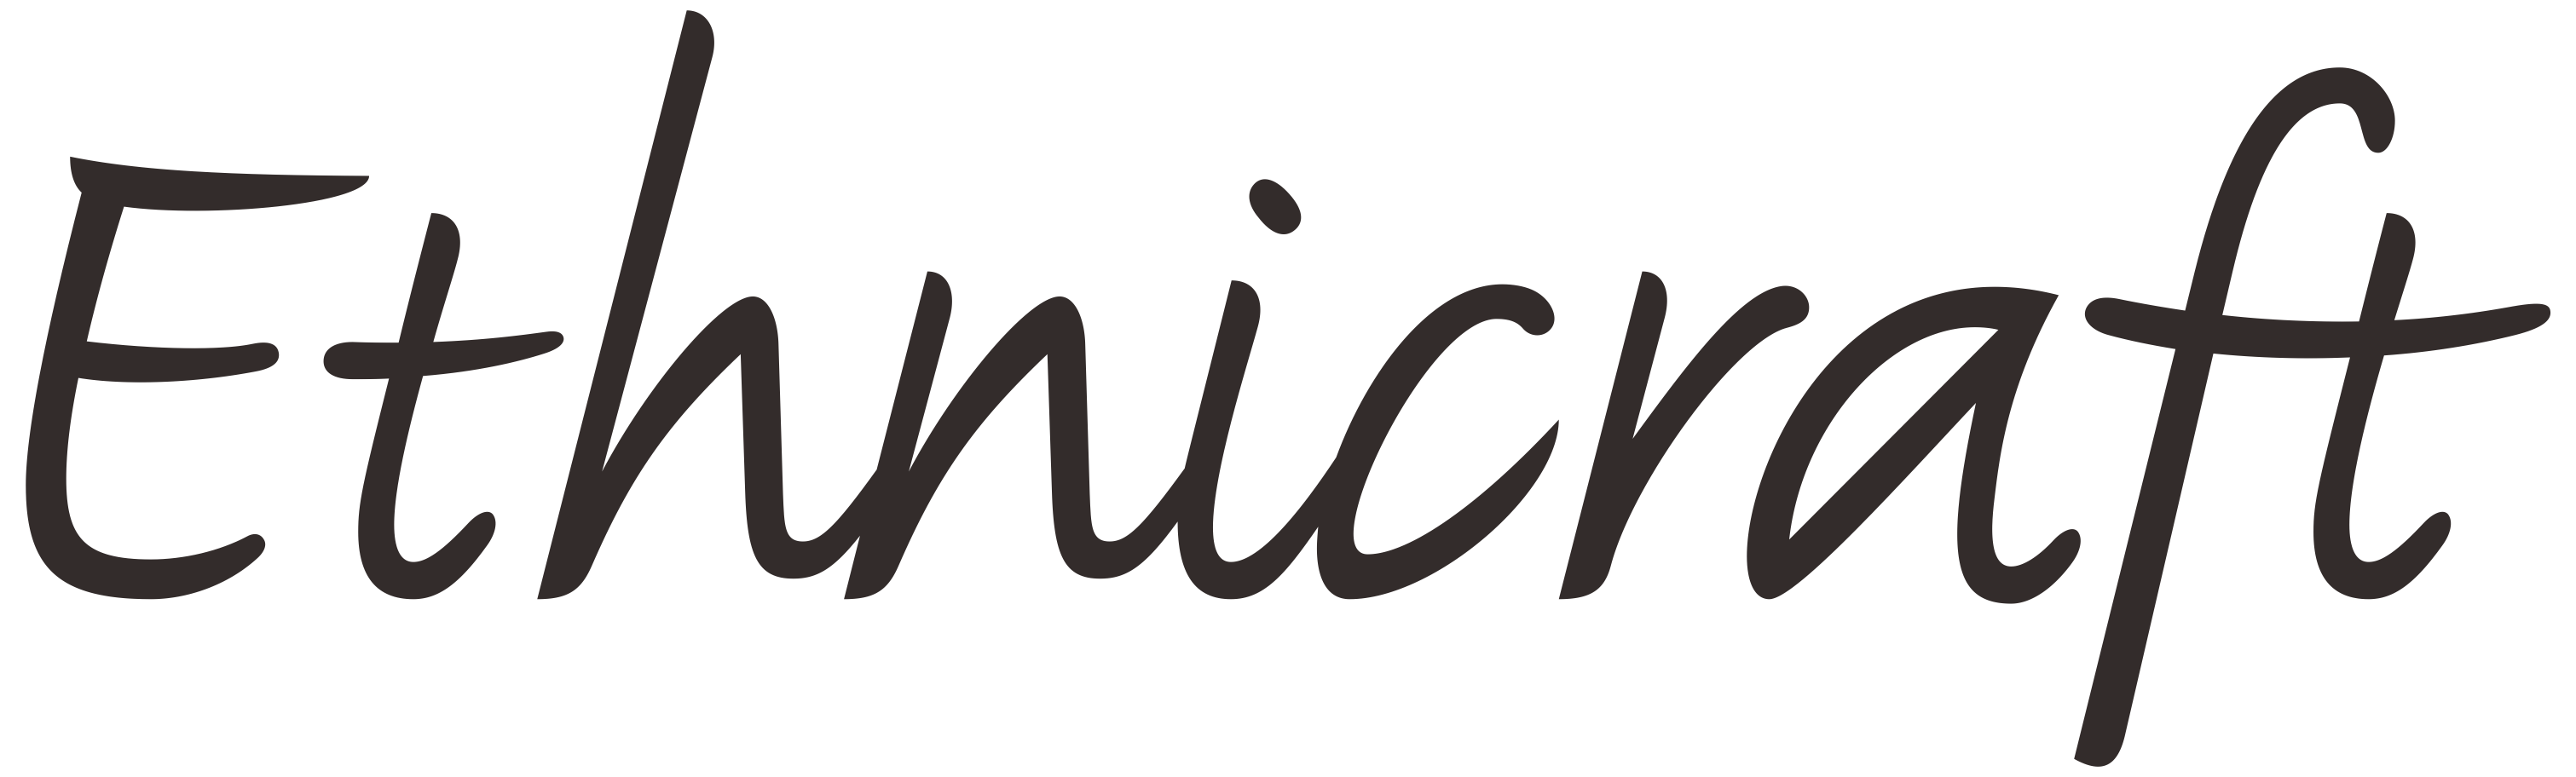 Ethnicraft logo